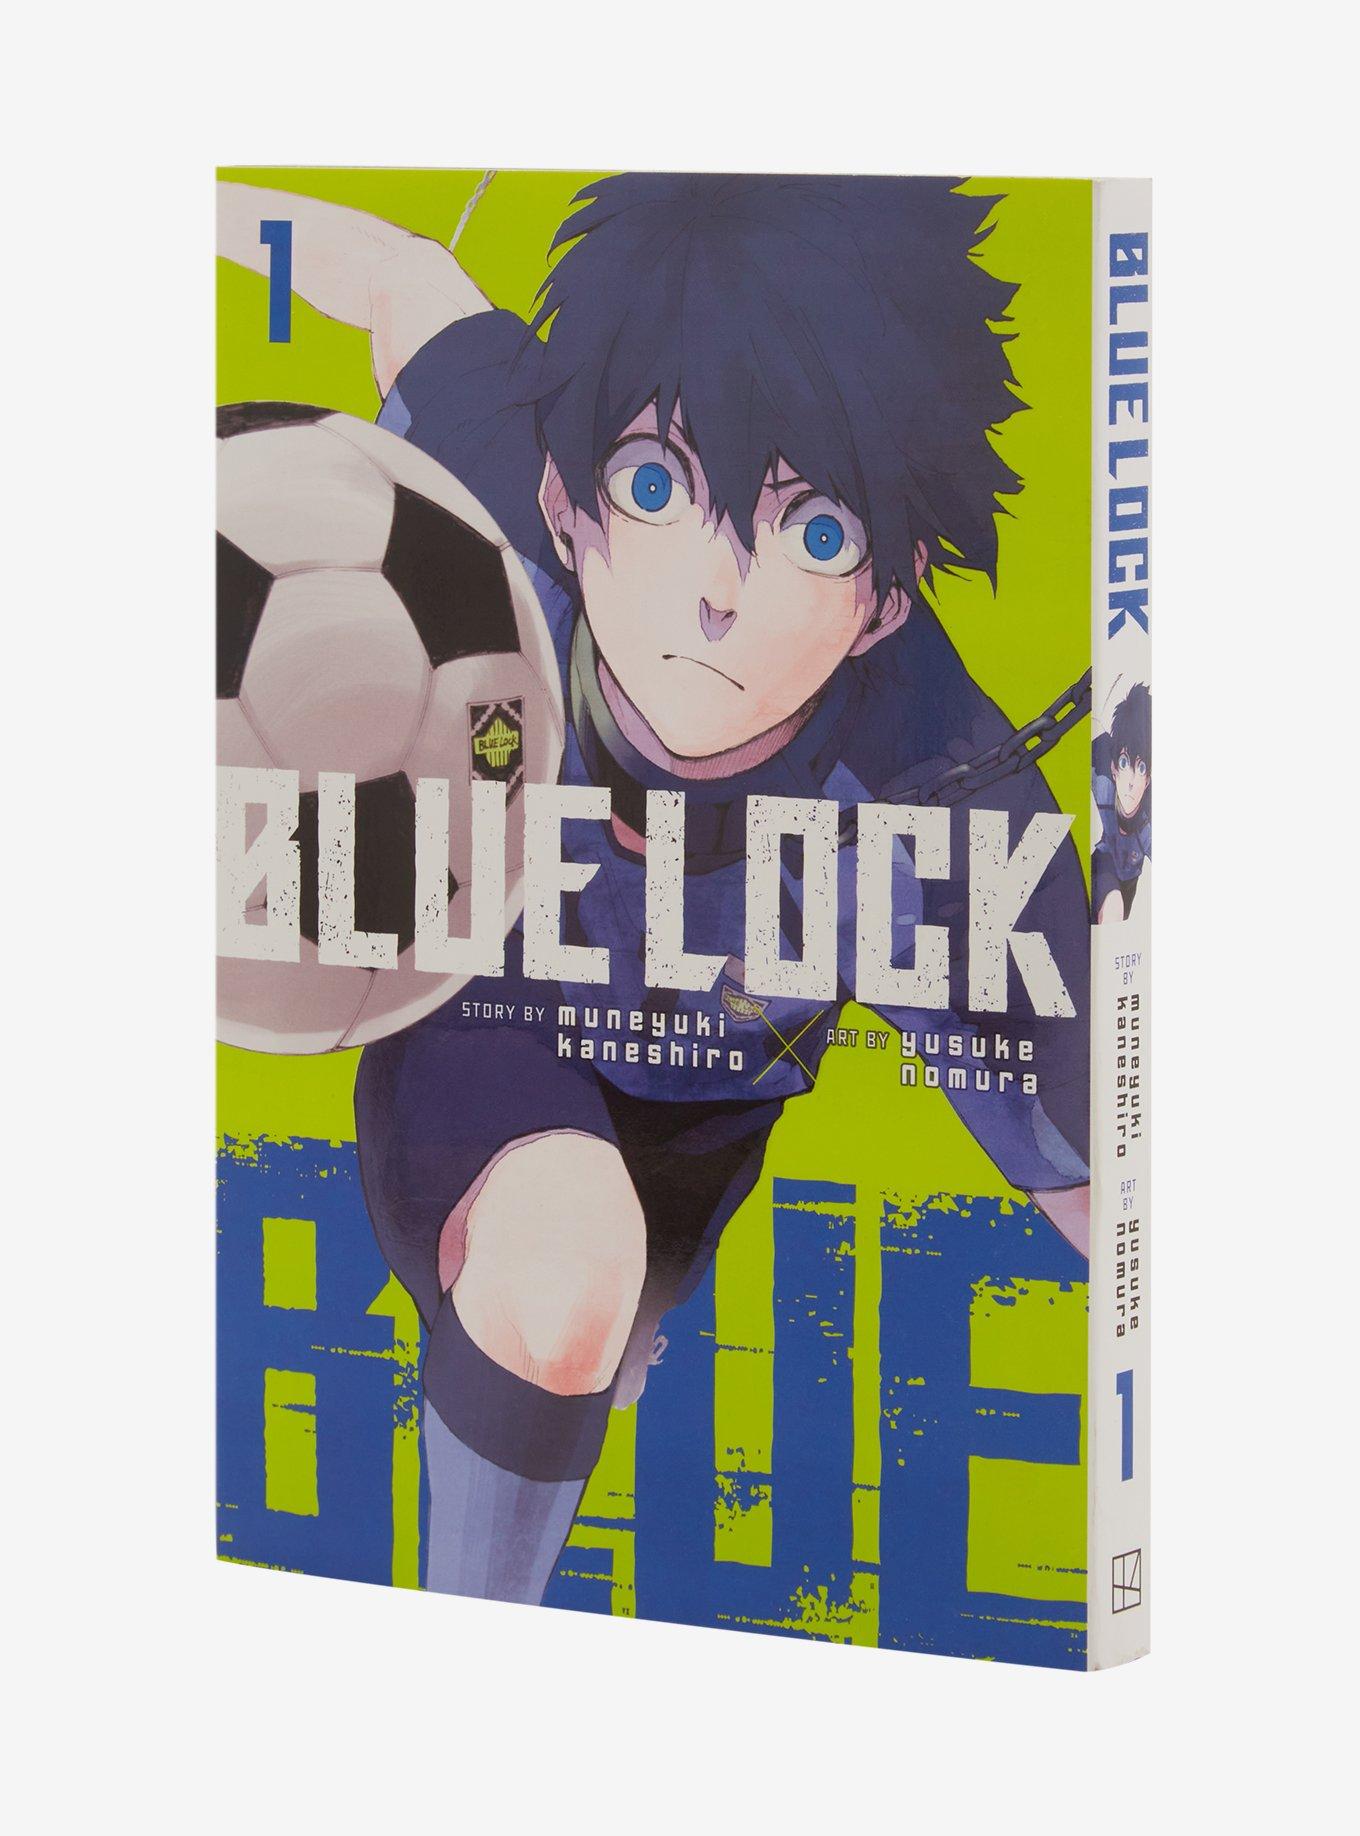 Blue Lock 3